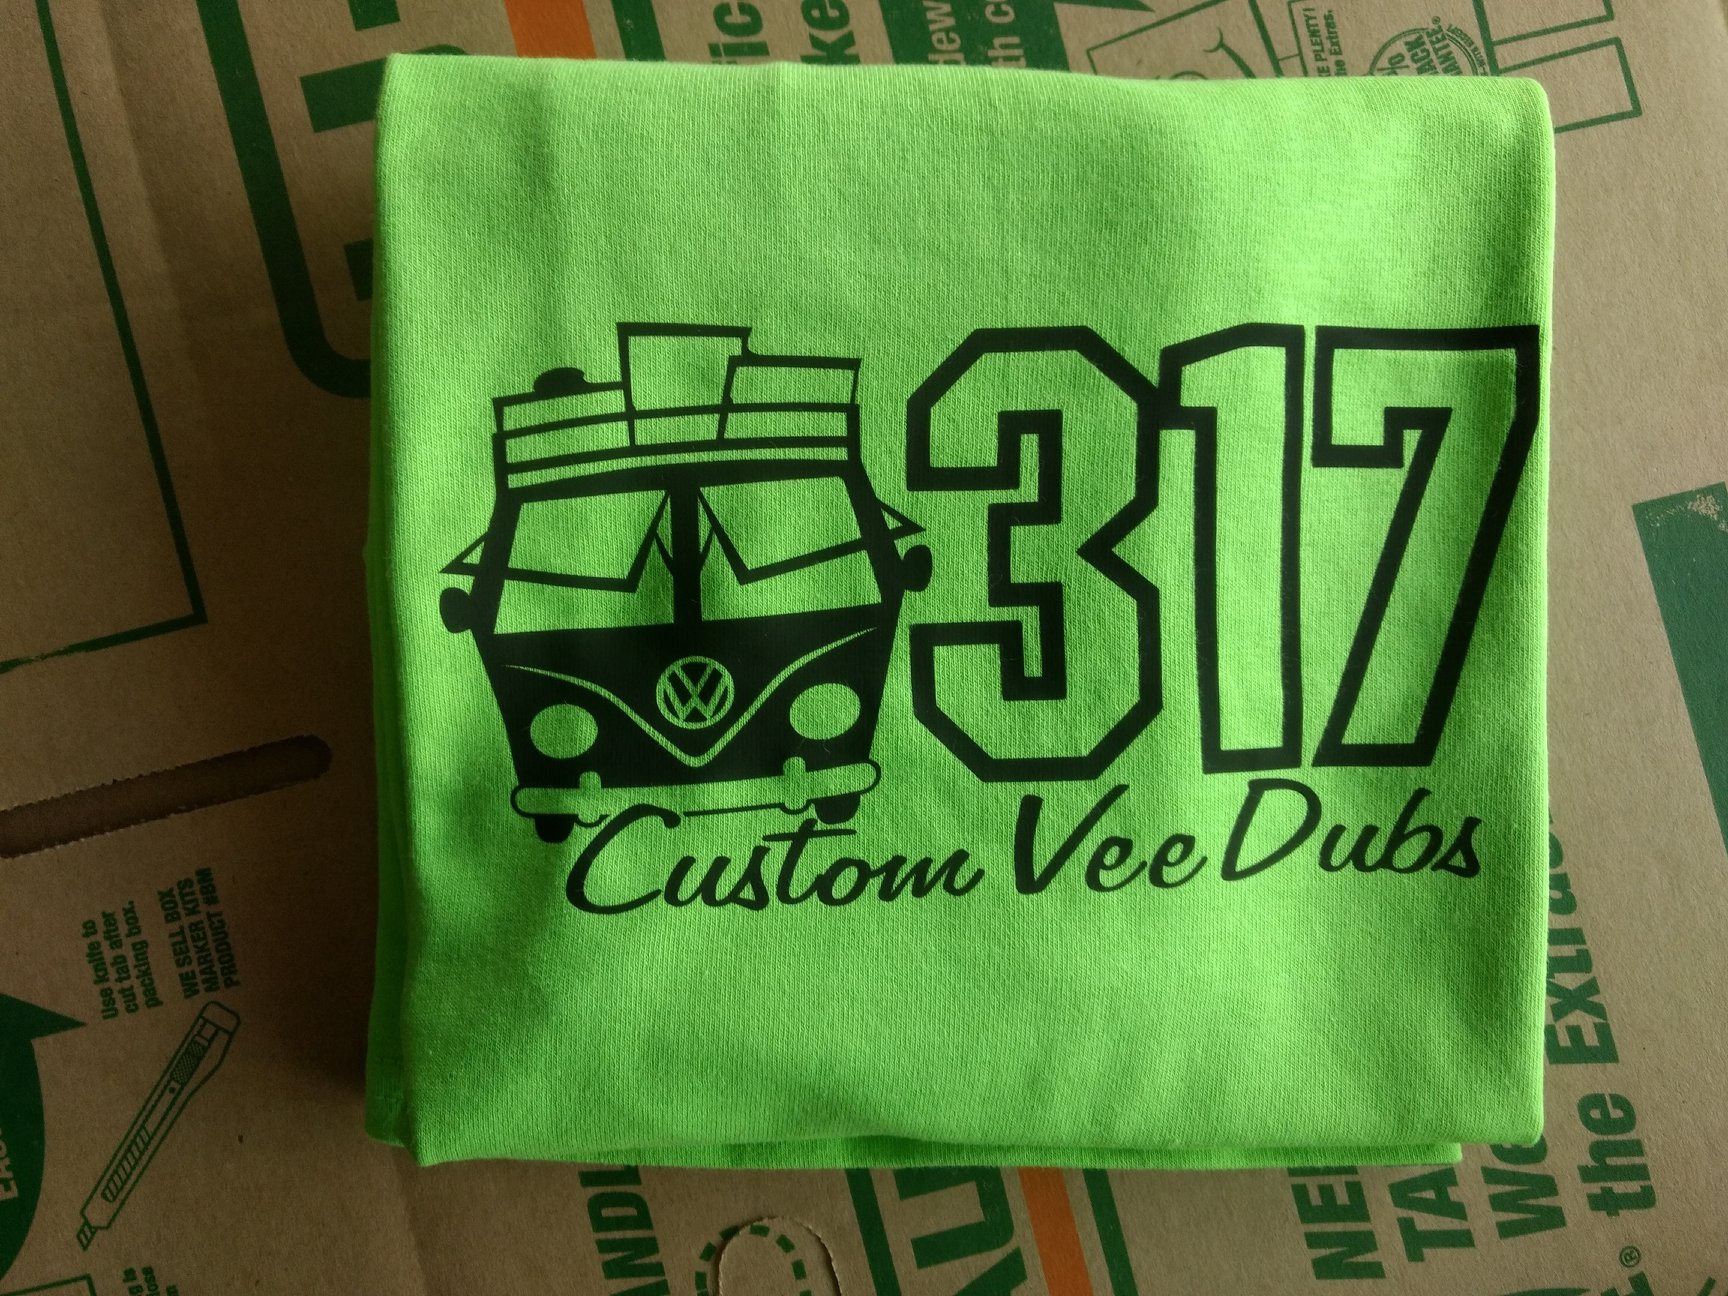 317 Custom Vee Dubs